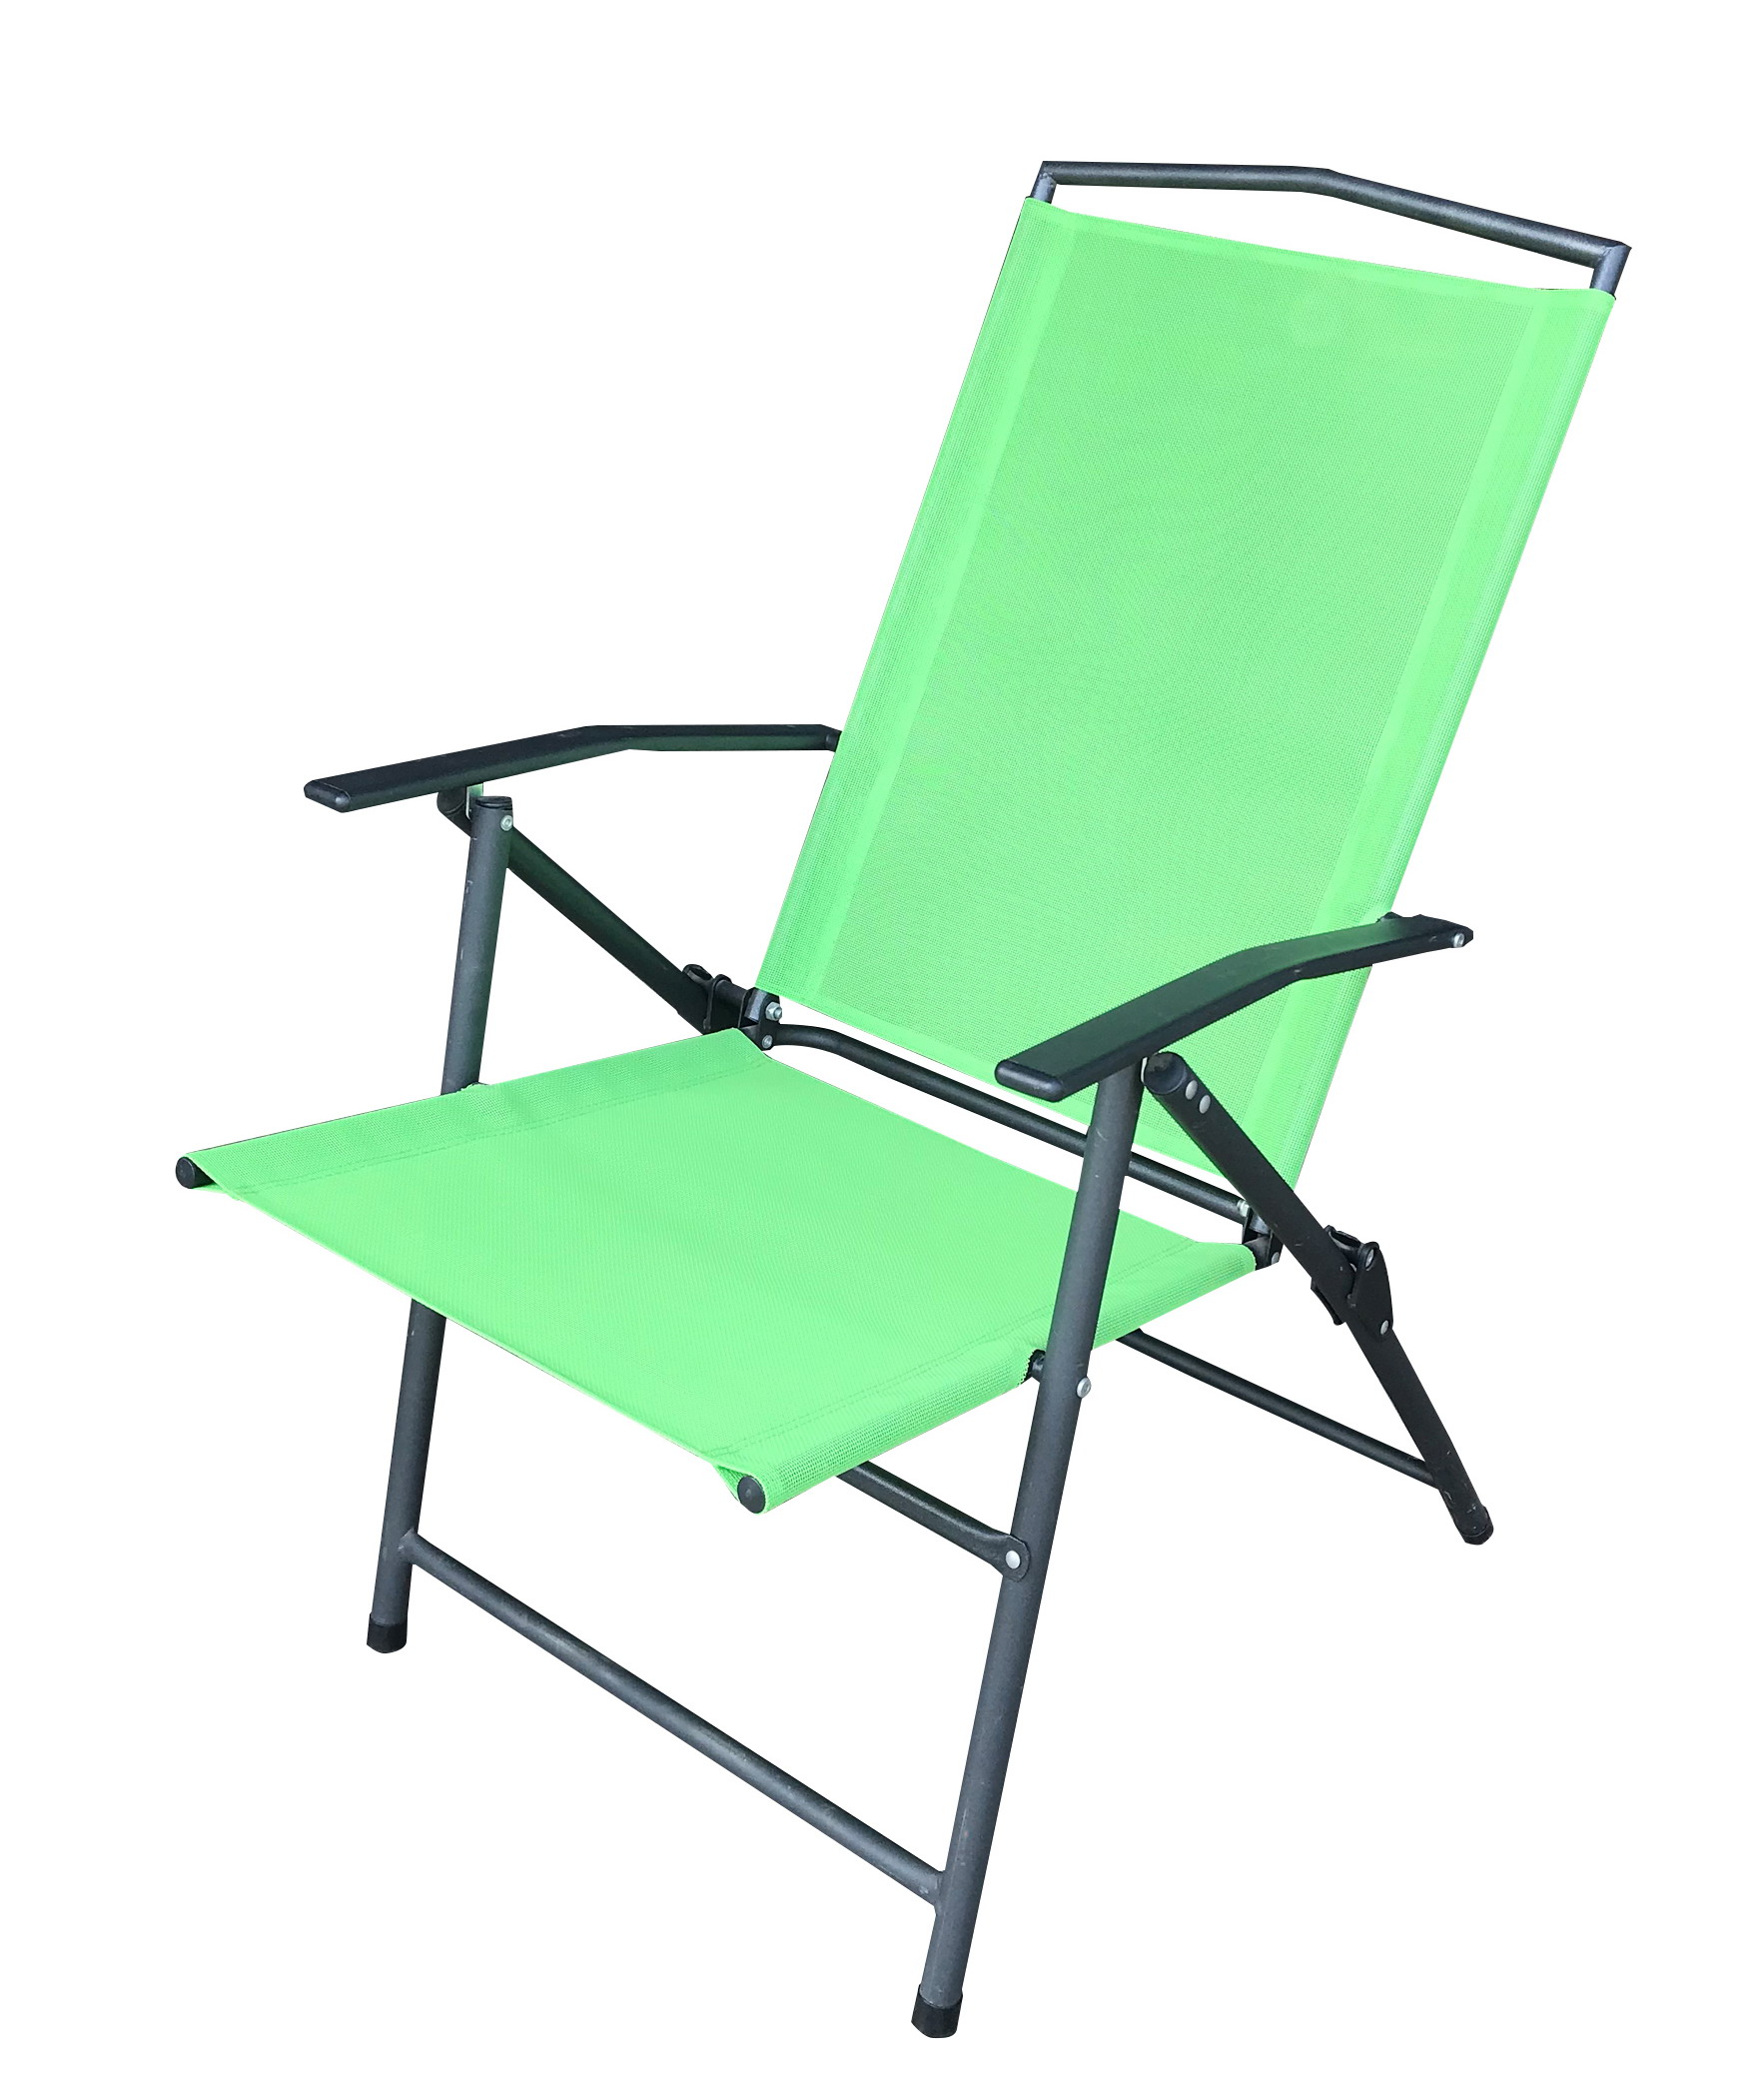 Uplion Garden Furniture durable popular Steel frame fabric garden folding chair